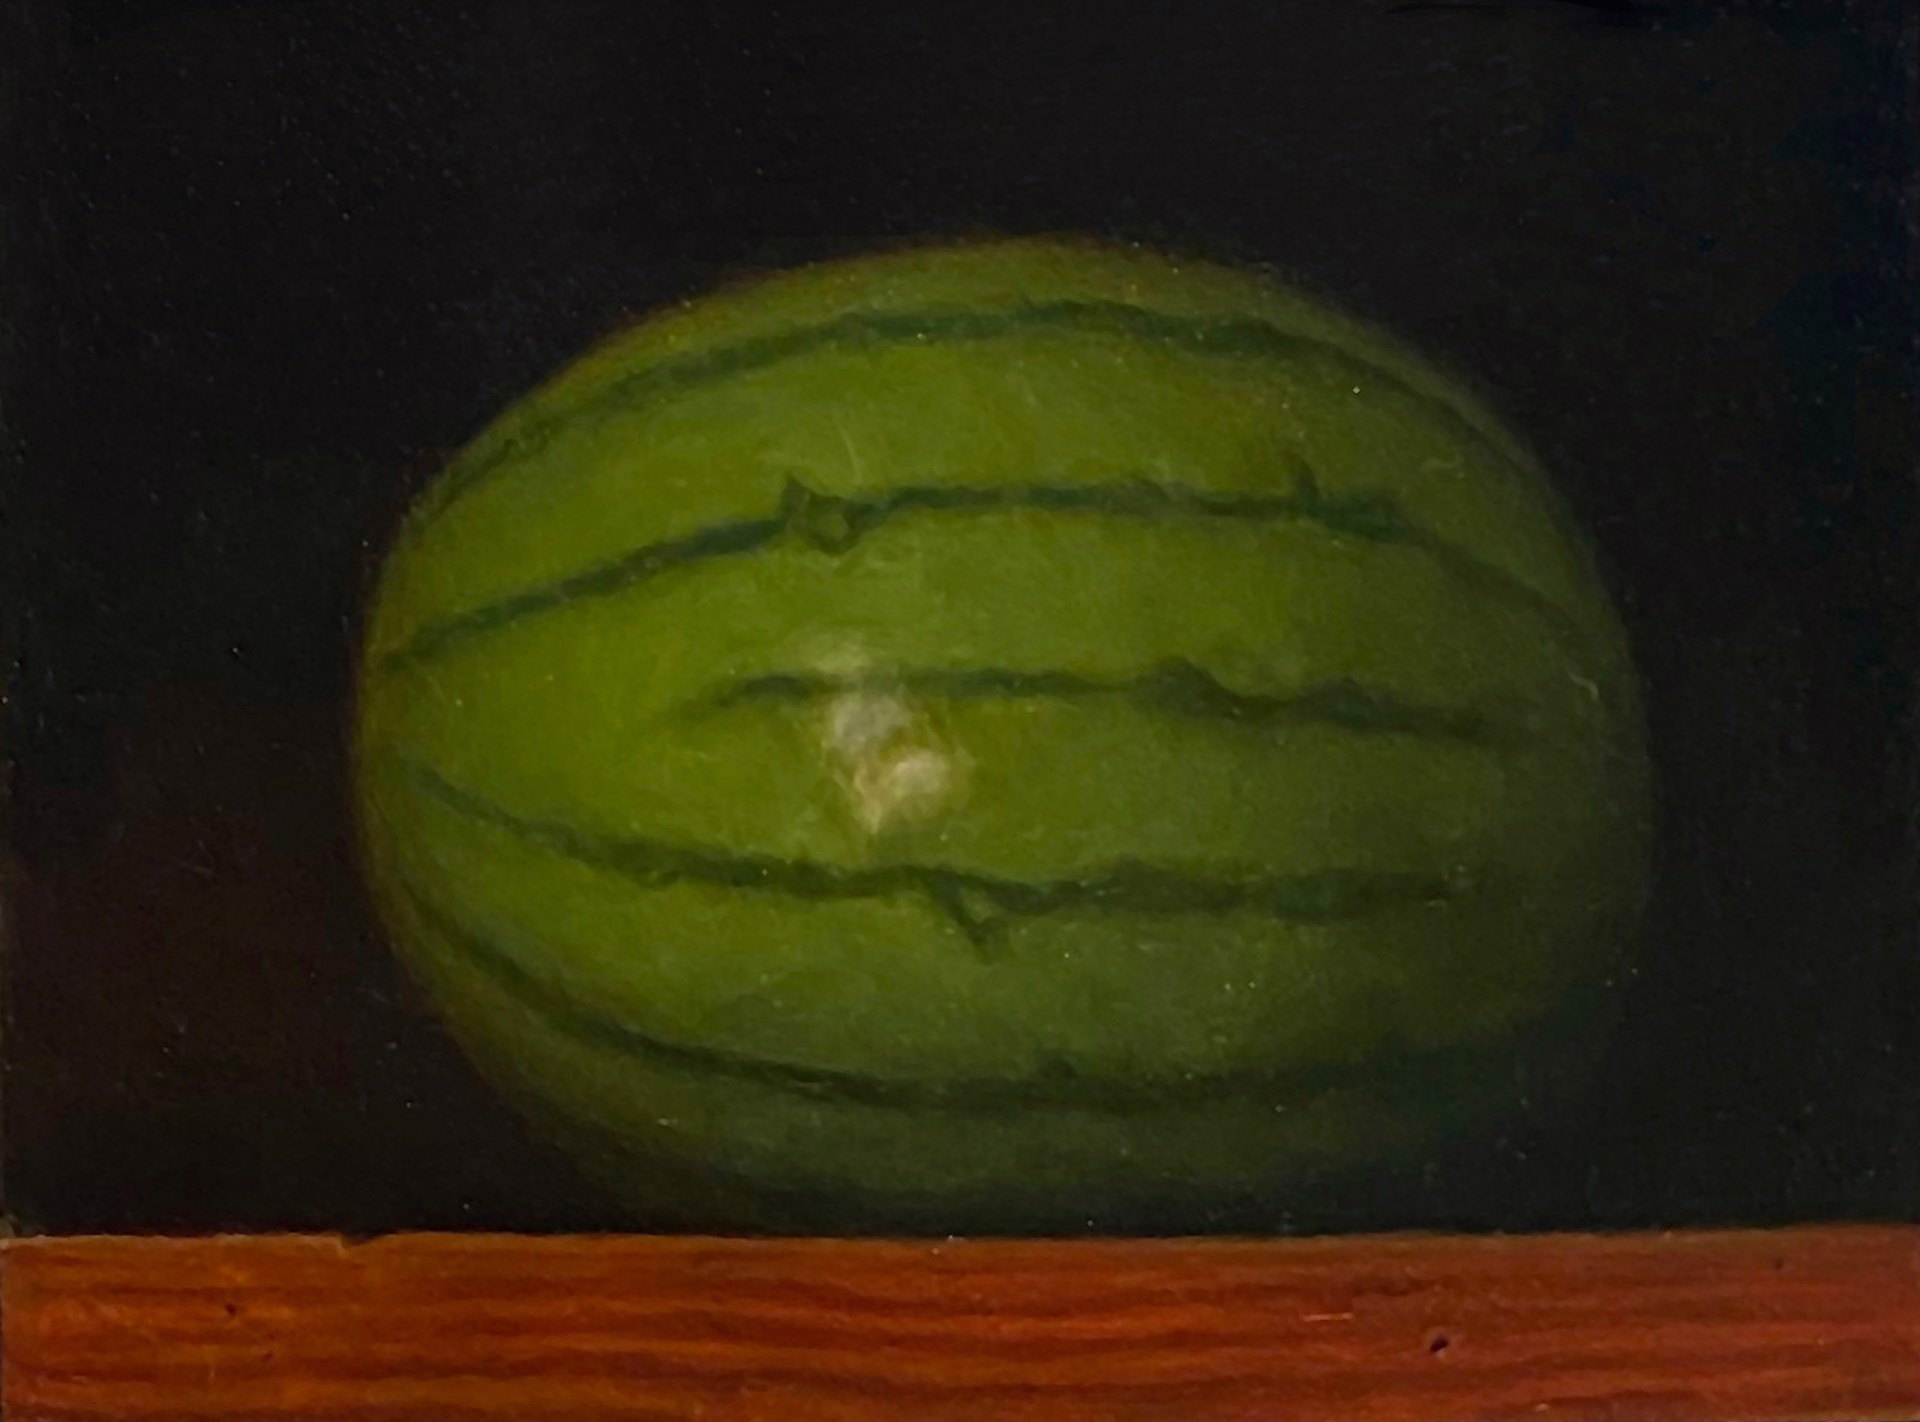 Watermelon by Jody Thompson